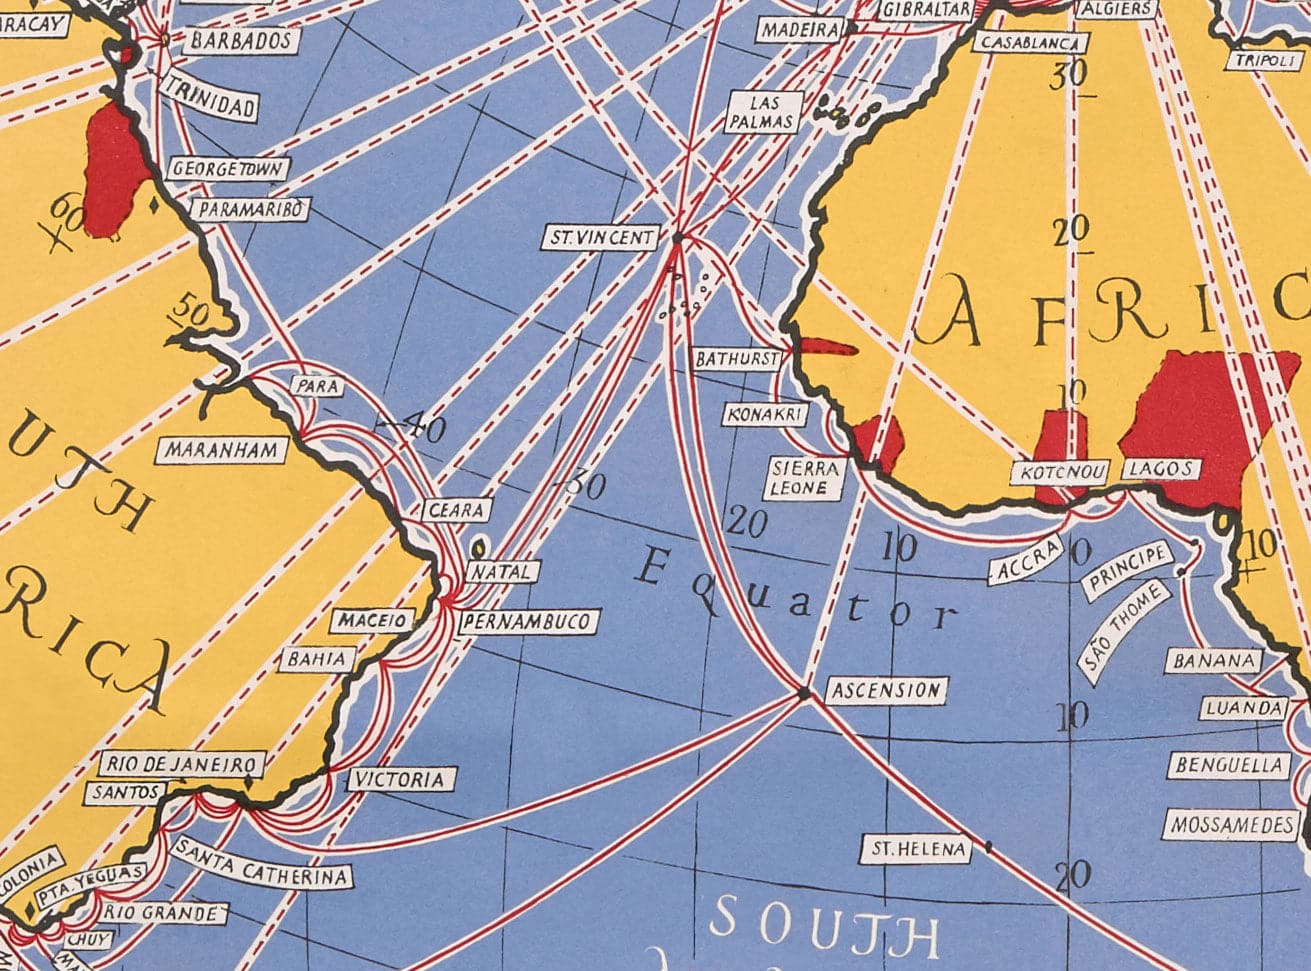 Cable & Wireless Great Circle Mapa, 1945 por Max Gill - Tabla de red submarina del Imperio Británico de la Tierra Piso